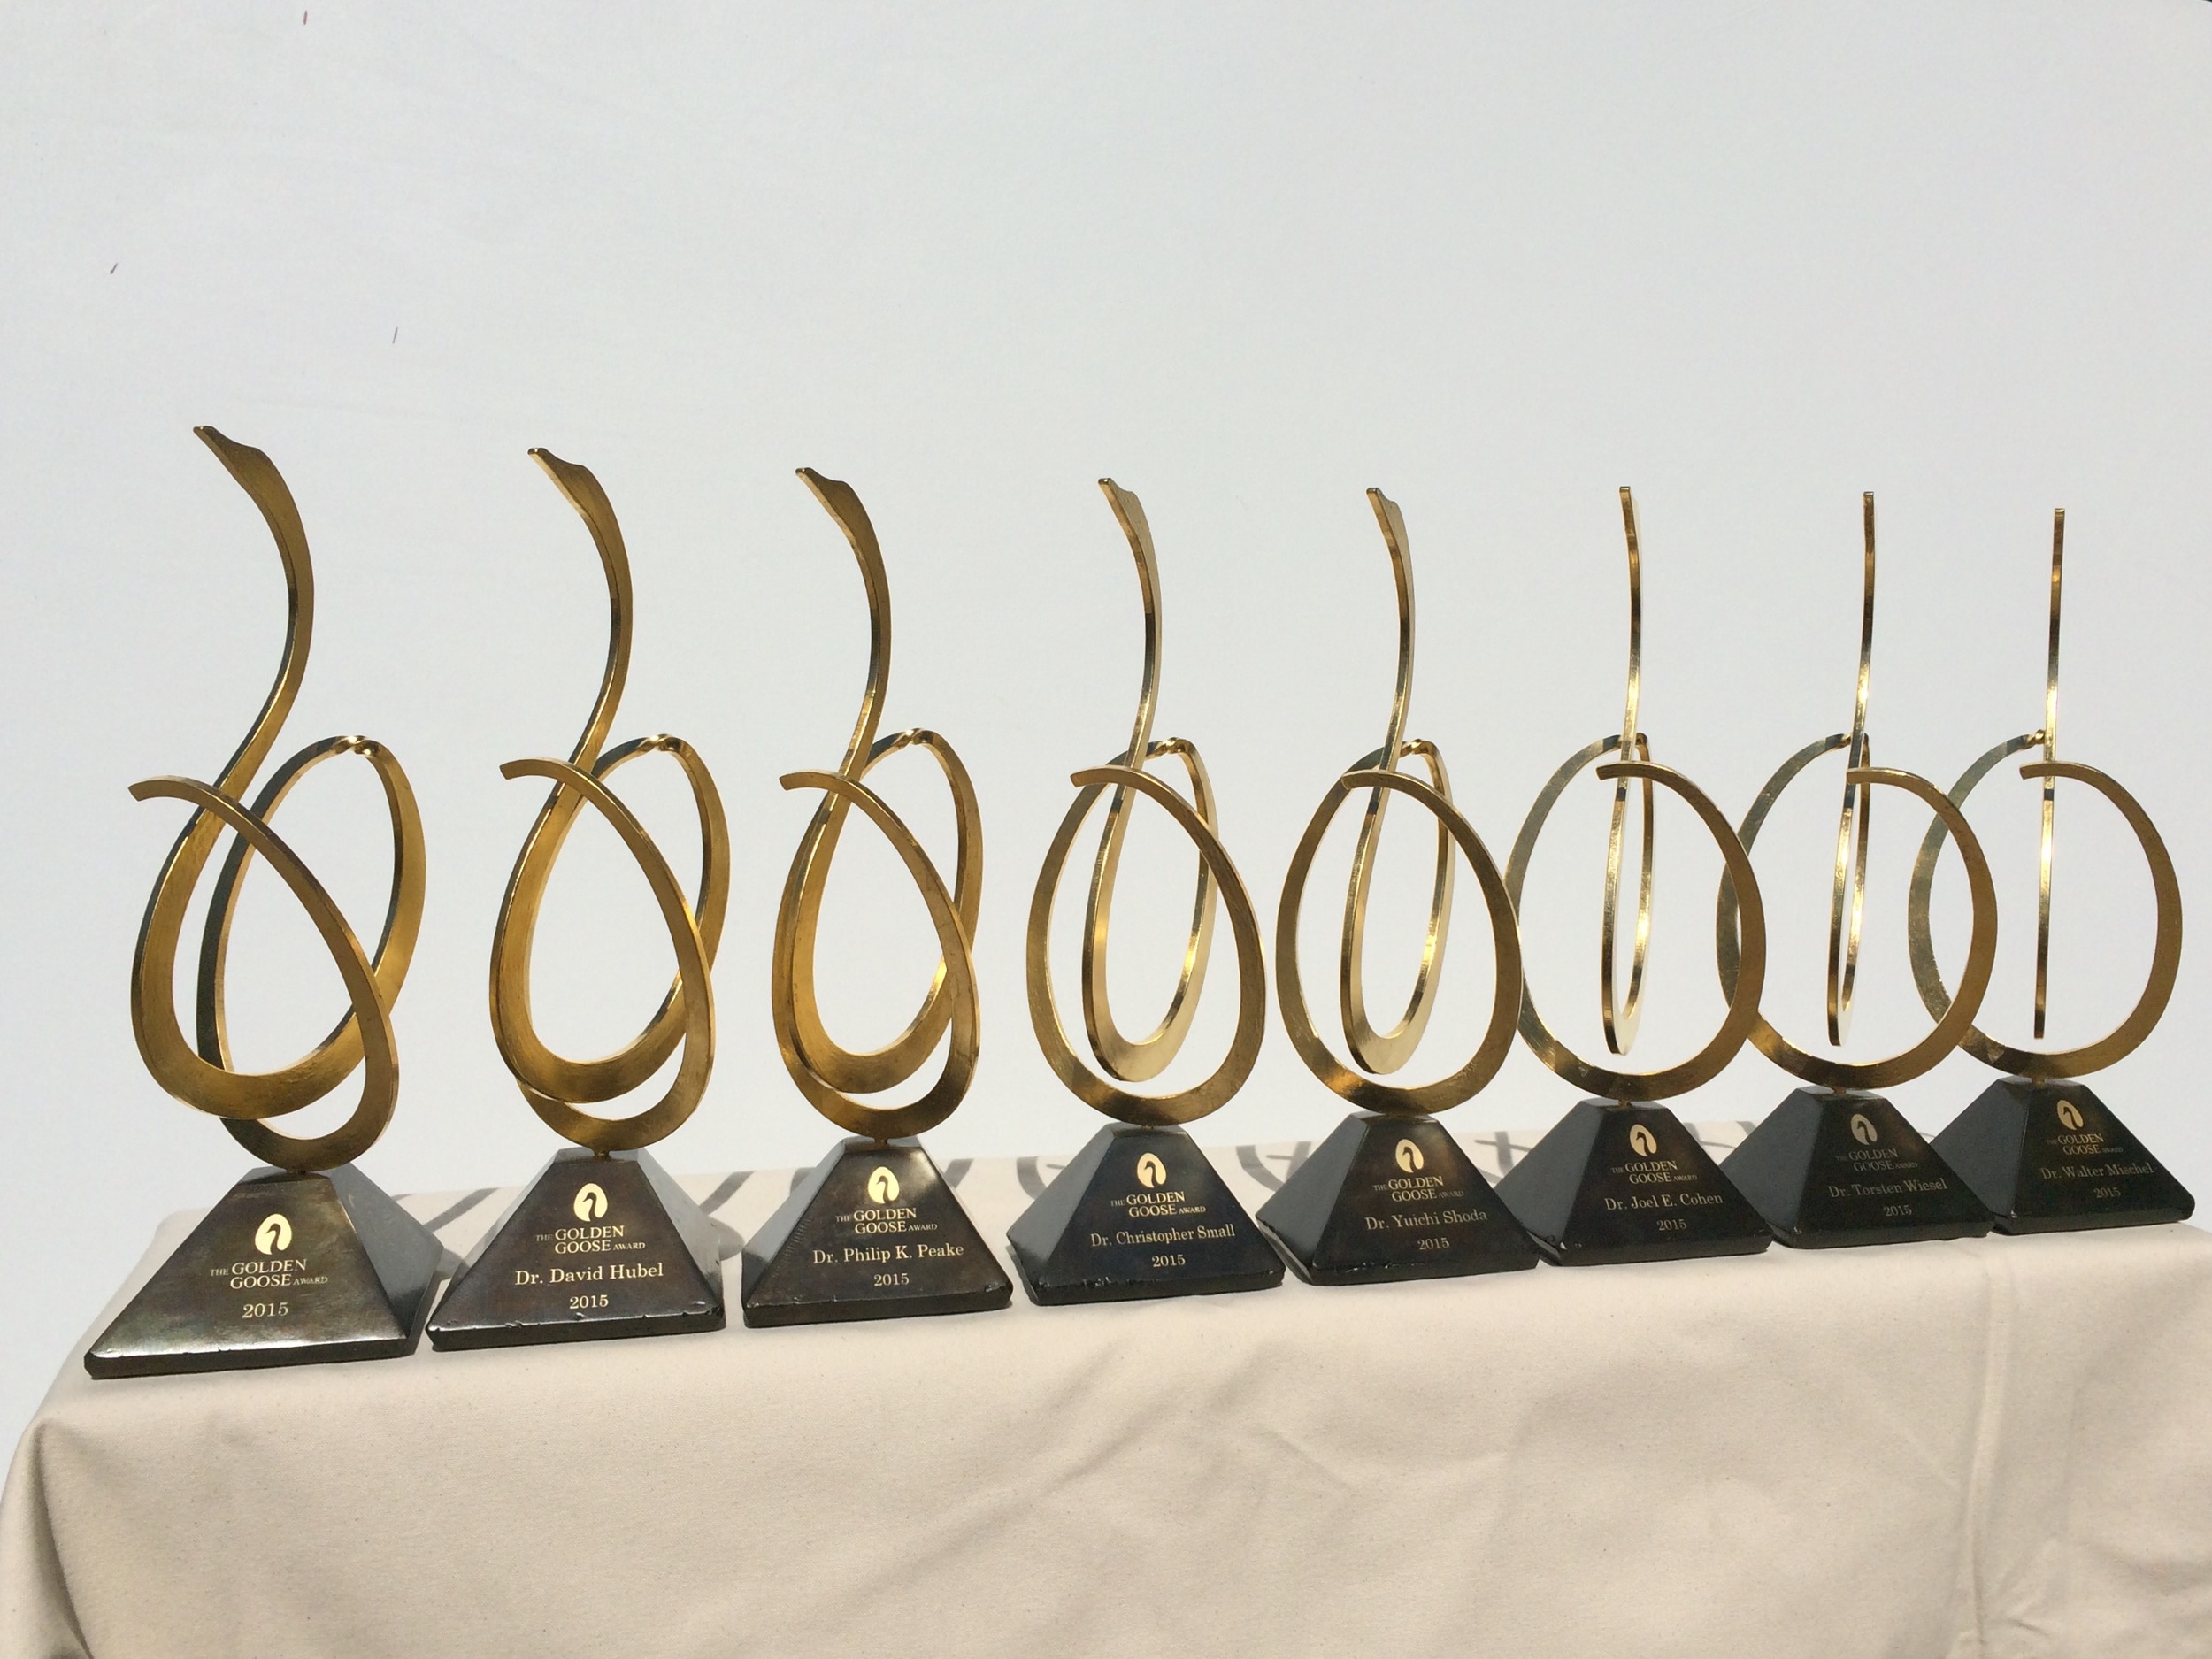 2015 Awards-inline.jpeg